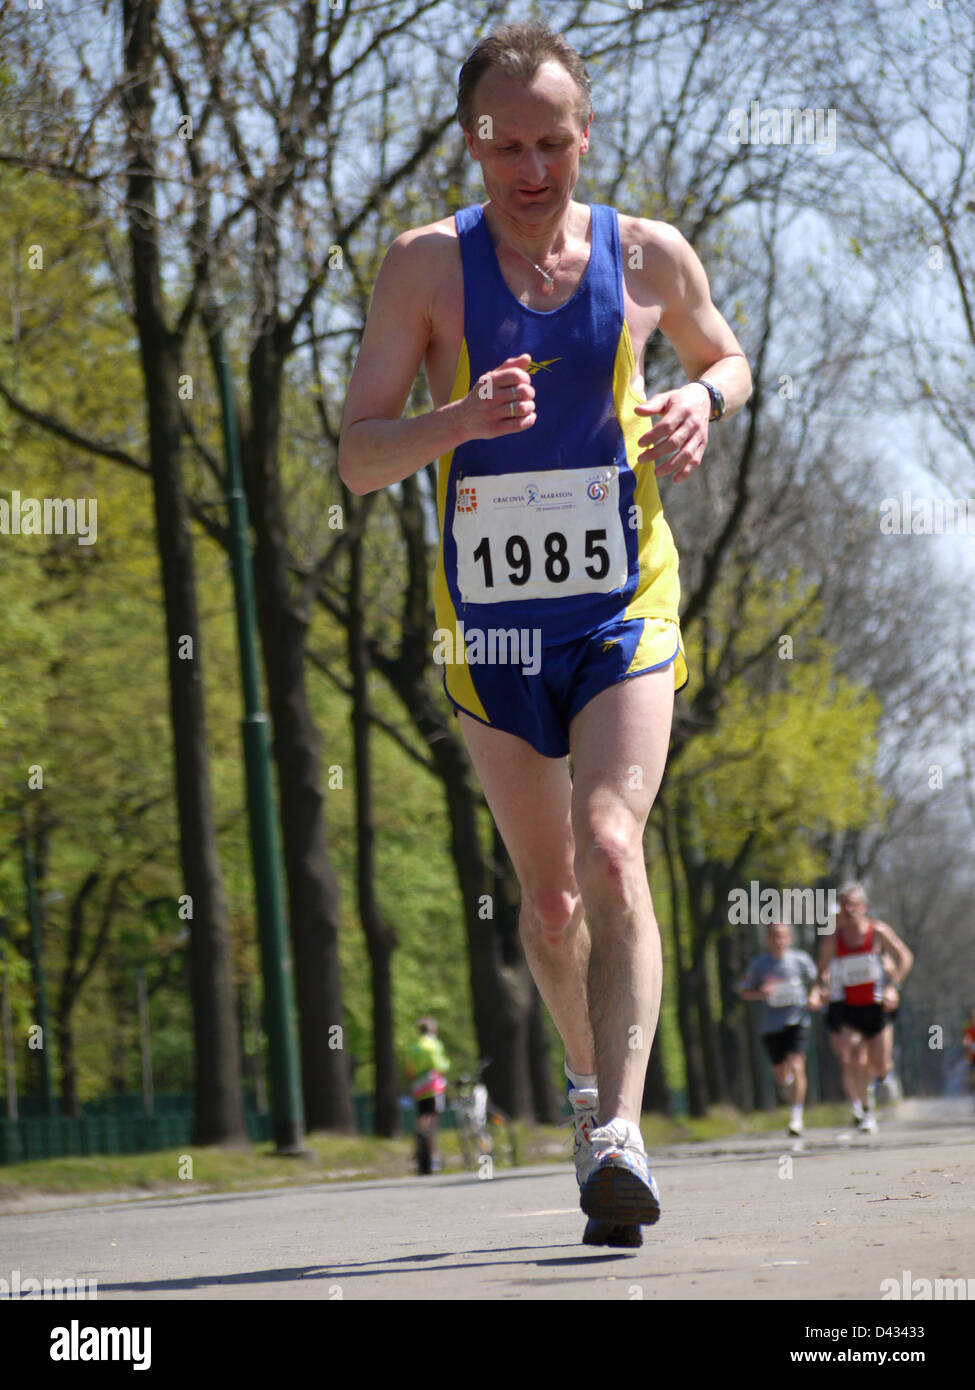 Marathon racer tomando parte en la Maratón Internacional de Cracovia, que se celebra anualmente en Cracovia, Polonia Foto de stock